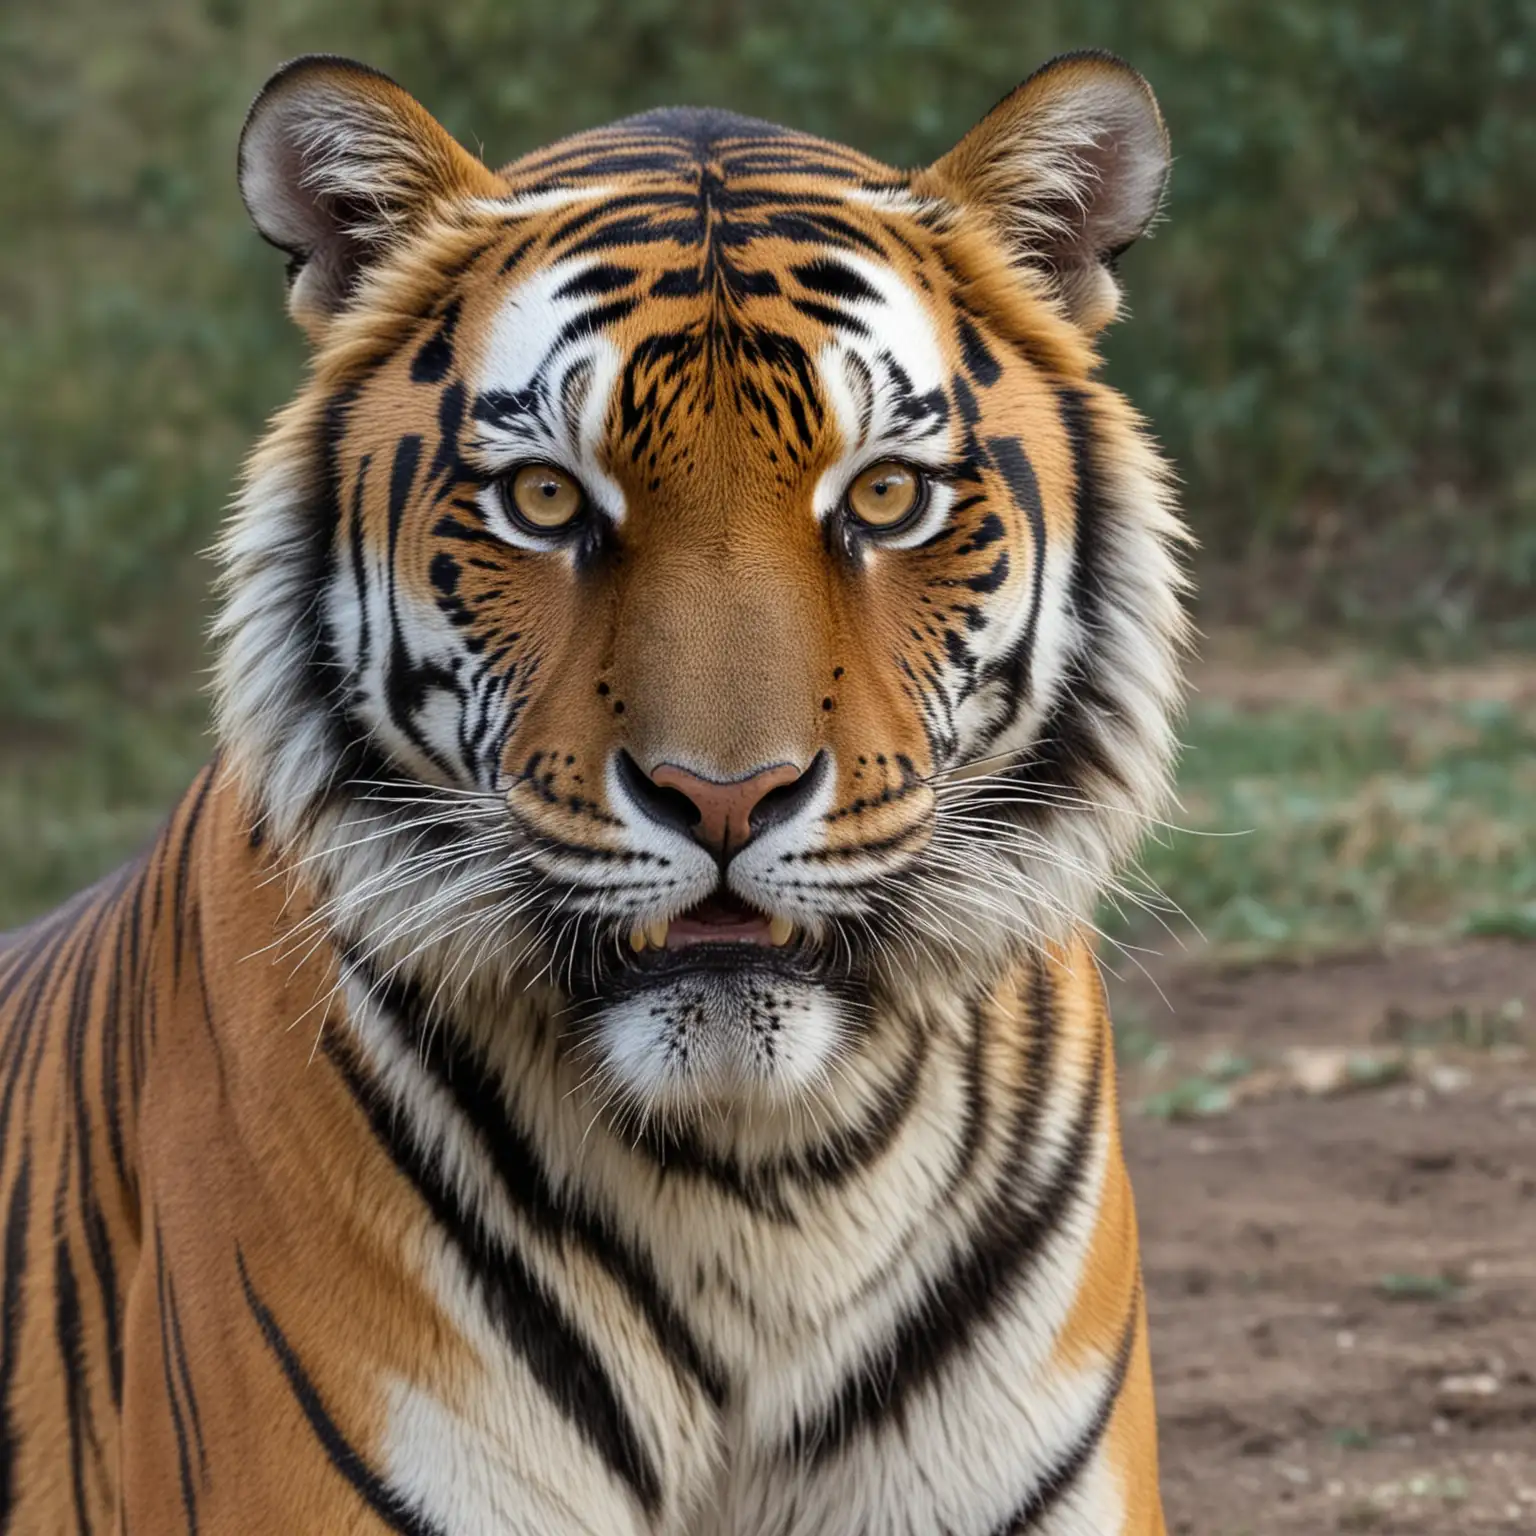 Closeup of a Majestic Tiger in Natural Habitat